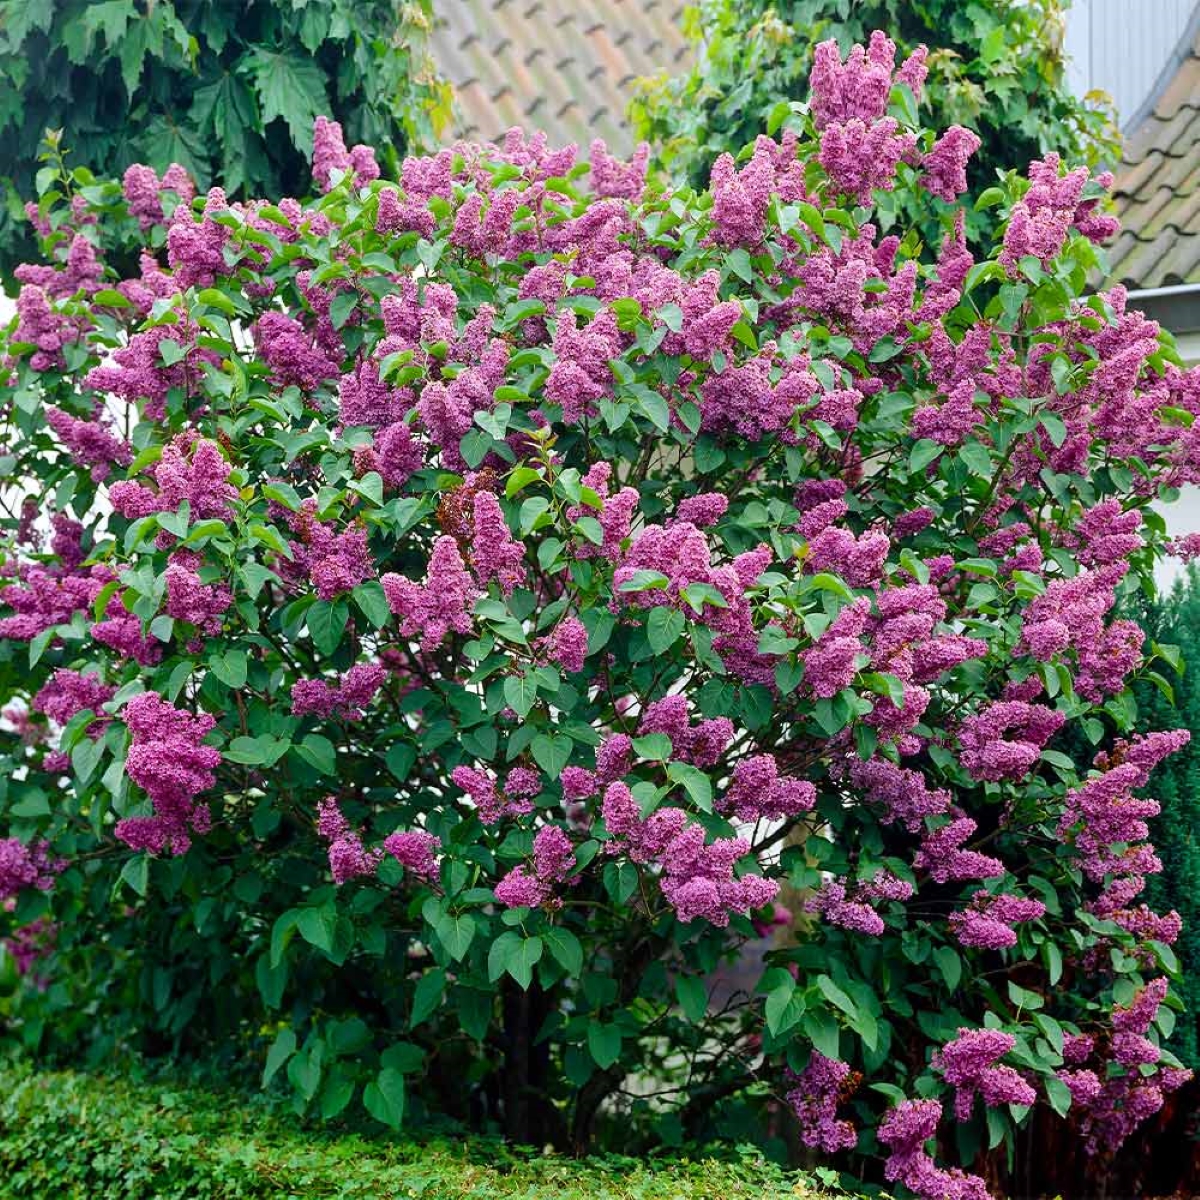 Bush with purple flowers